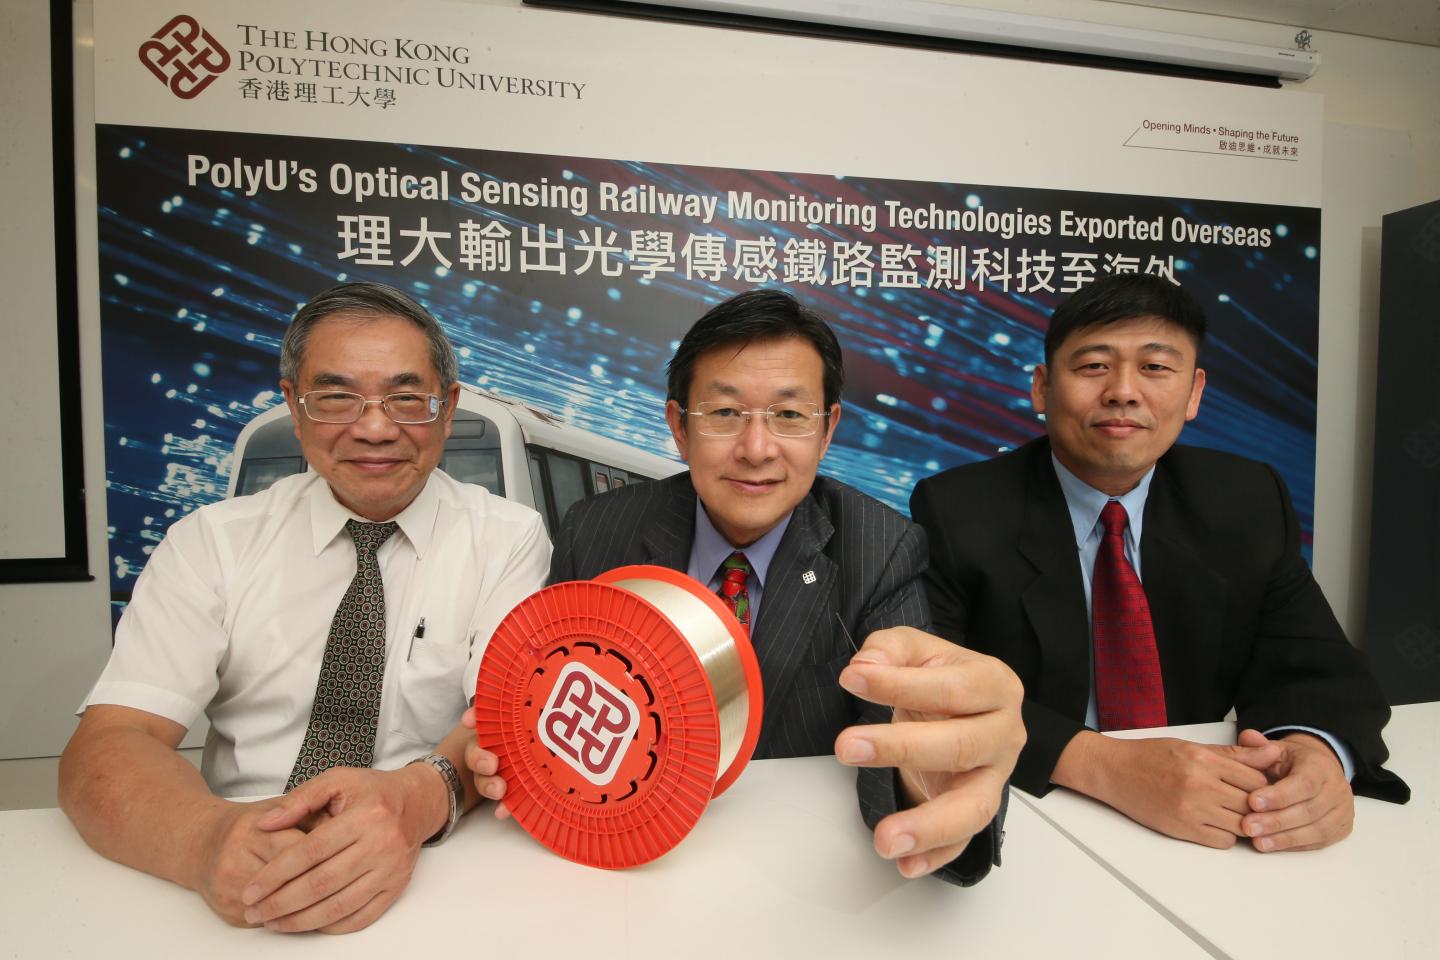 PolyU's Proprietary Optical Fiber Sensing Network for Railway Monitoring Exported Overseas